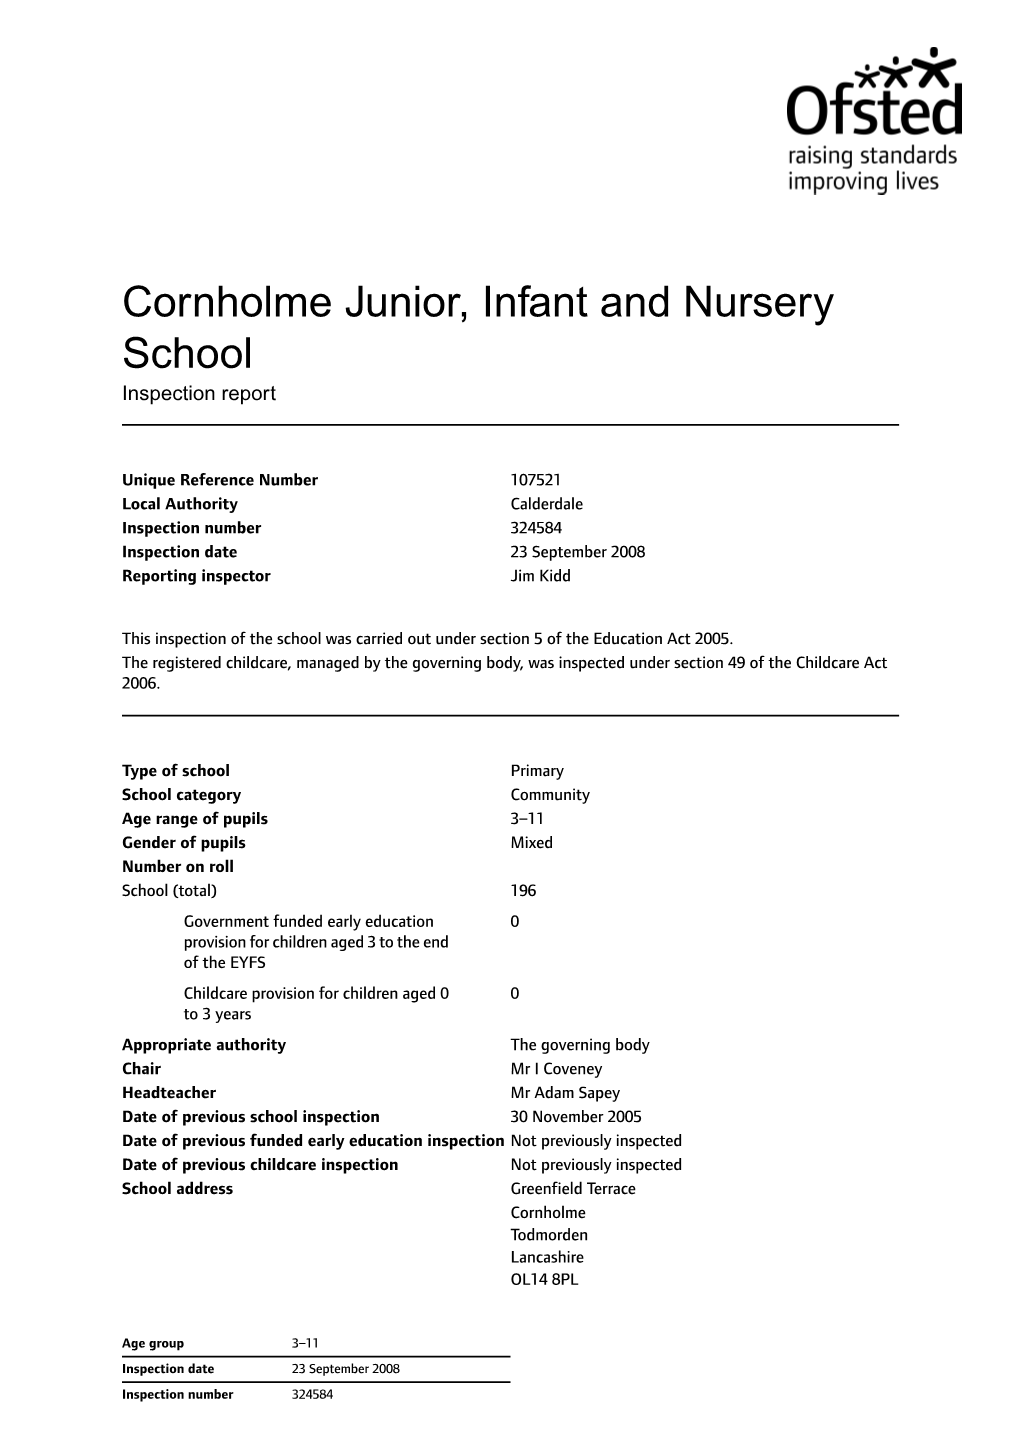 Cornholme Junior, Infant and Nursery School Inspection Report